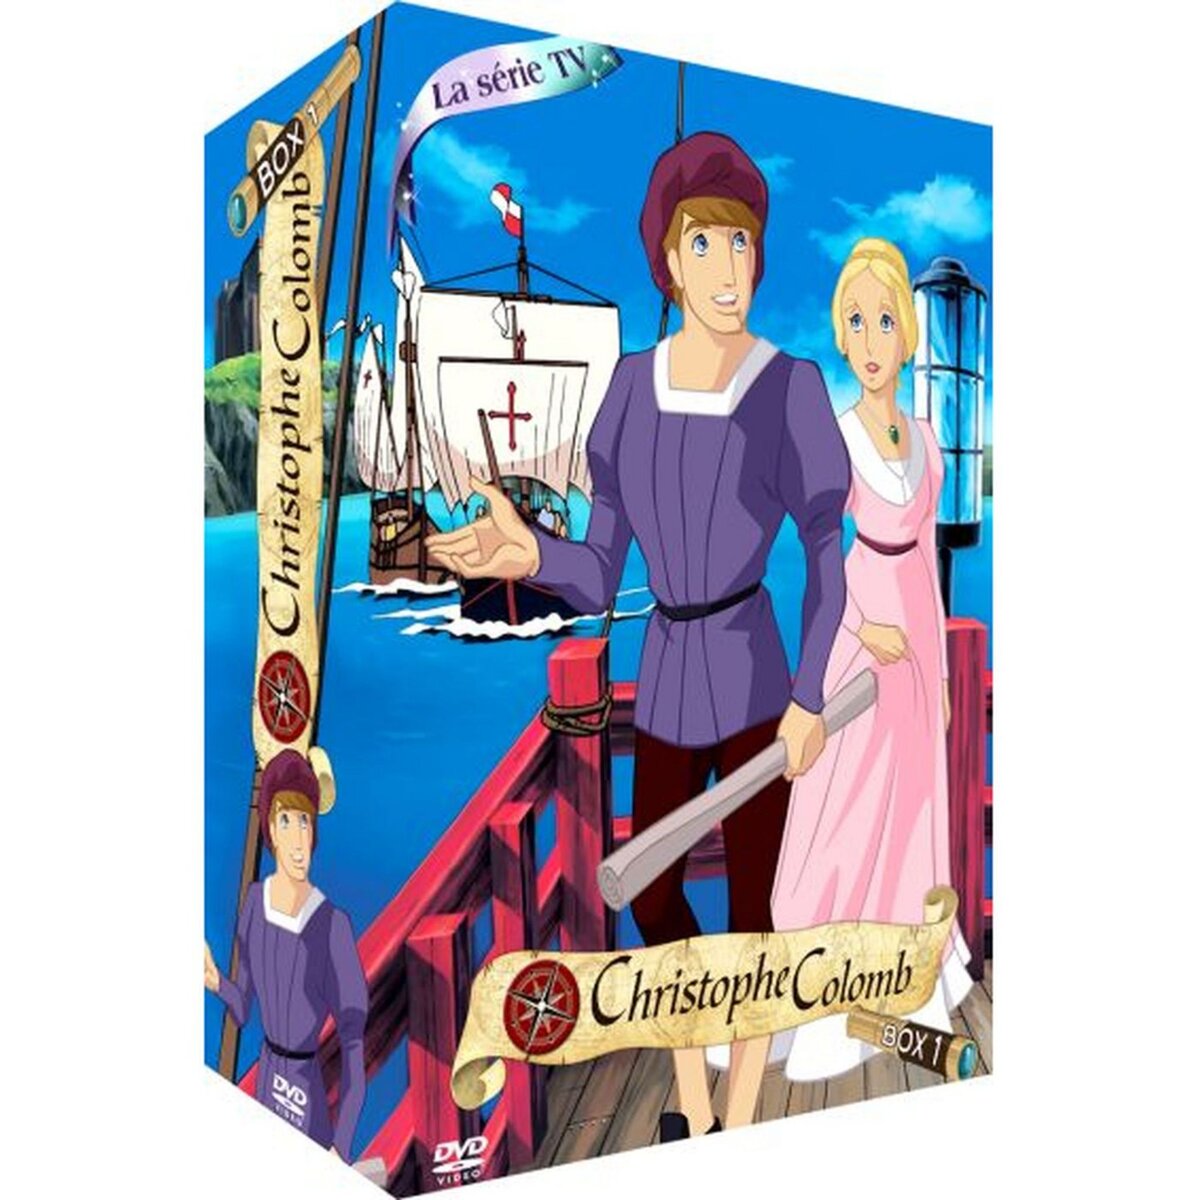 Christophe Colomb Vol 1/2 DVD